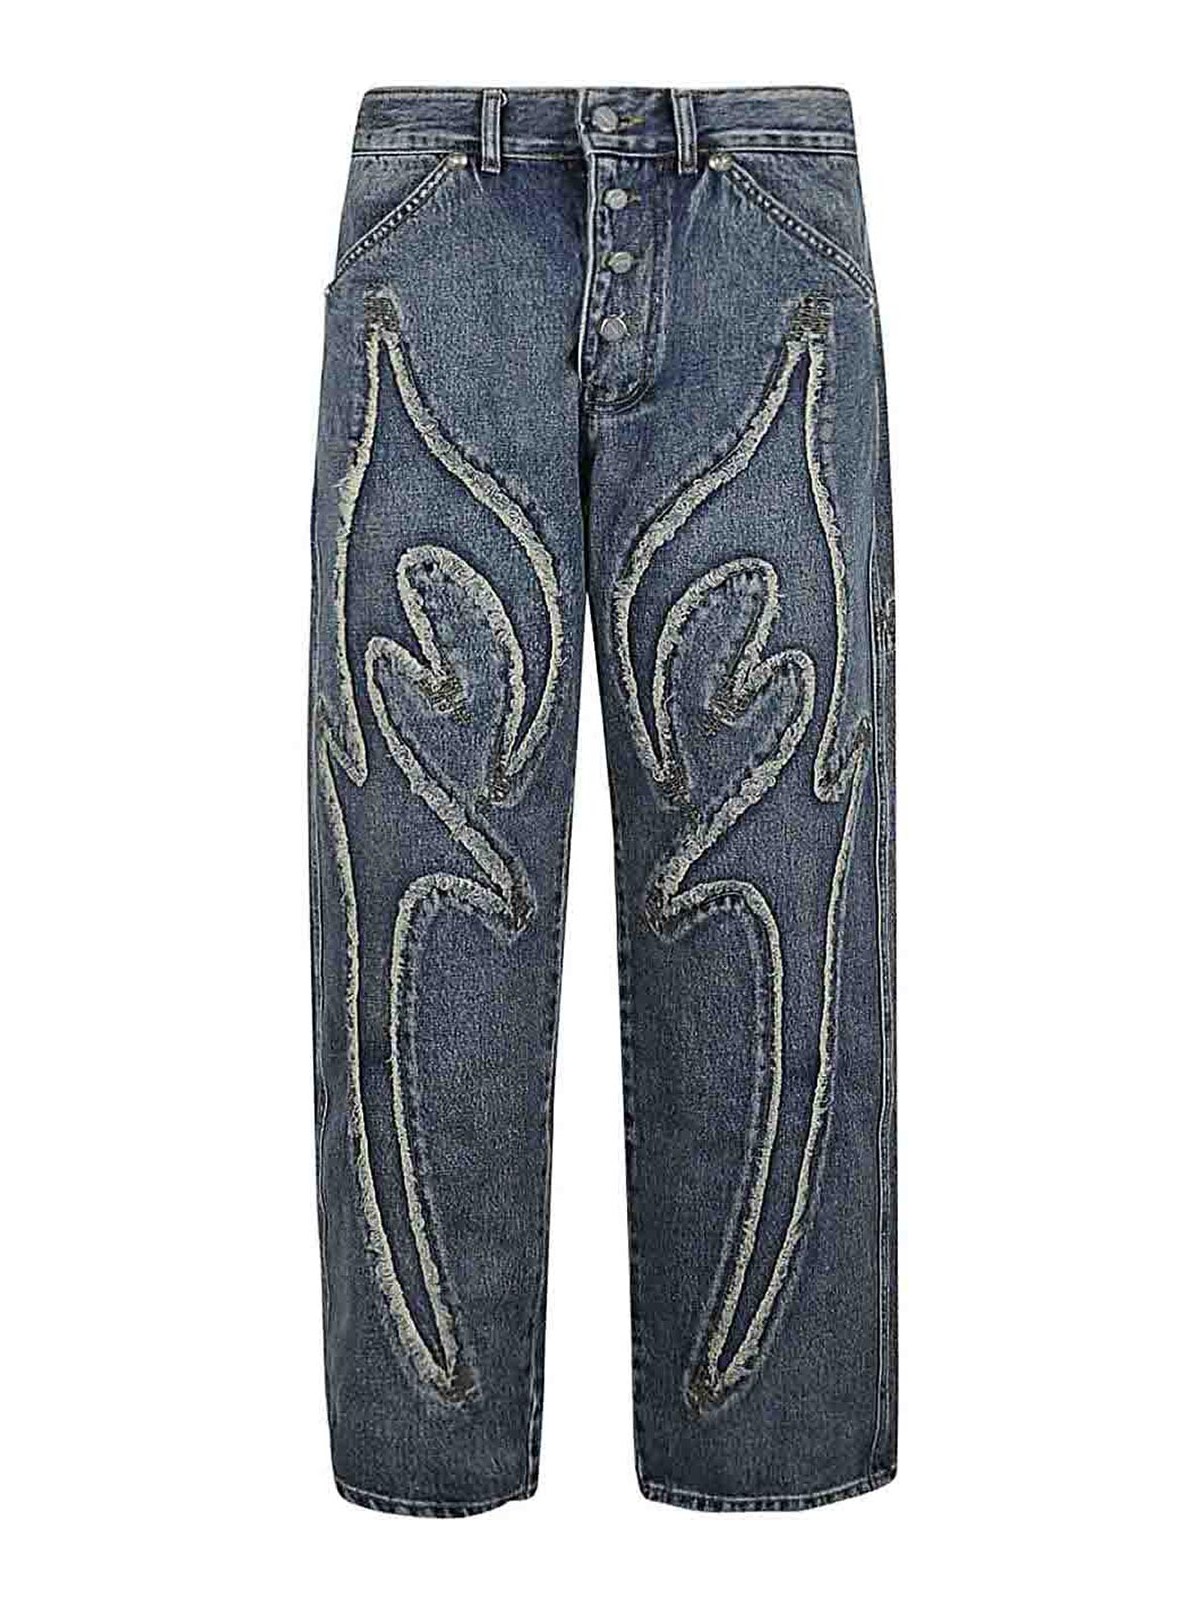 Tribal denim jeans